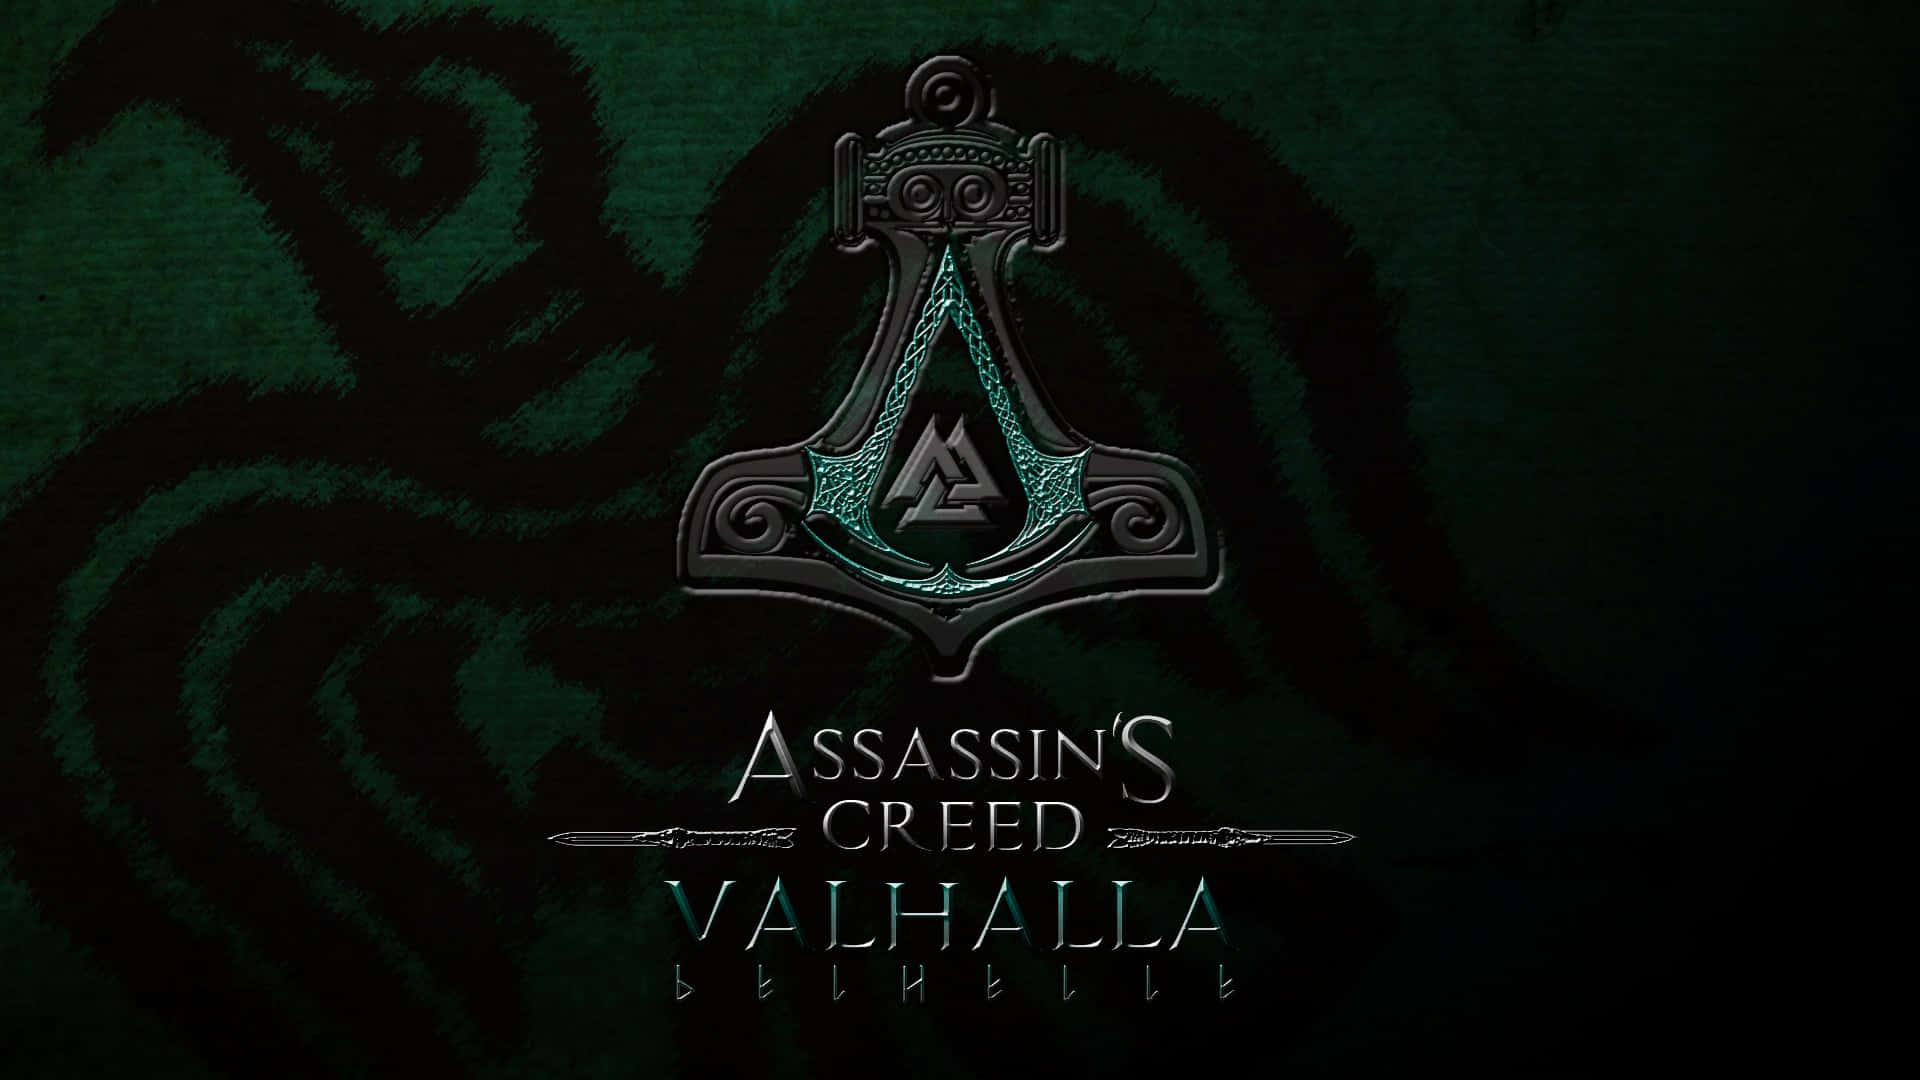 Explore the North in Assassin's Creed Valhalla